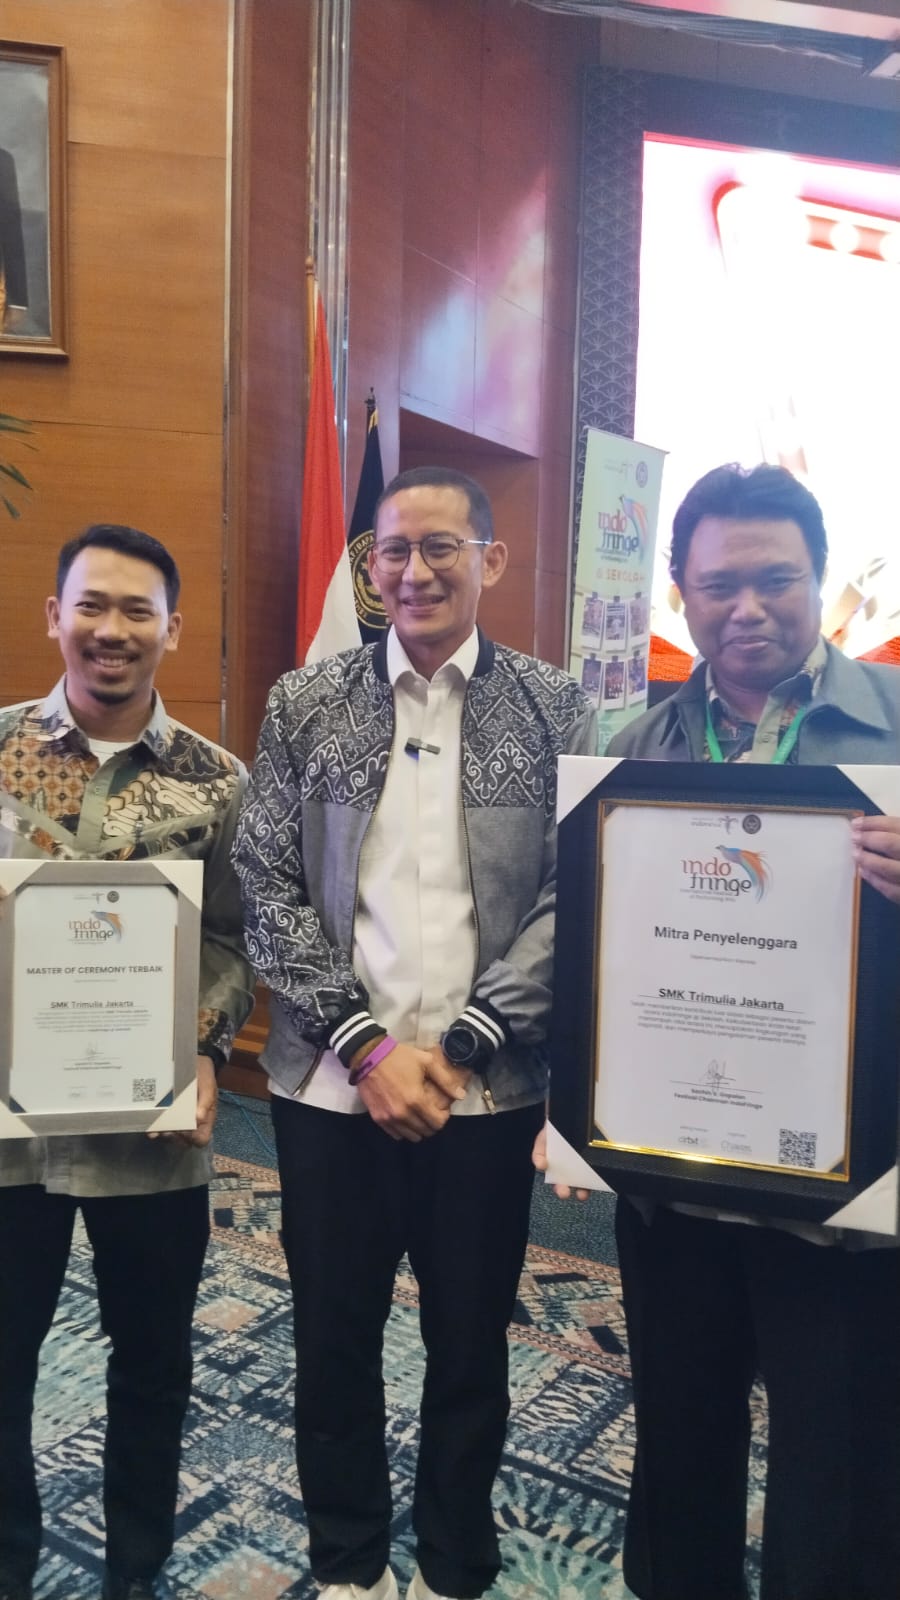 SMK Trimulia Jakarta menerima penghargaan Master of Ceremony Terbaik pada Event Indofringe Area Jakarta